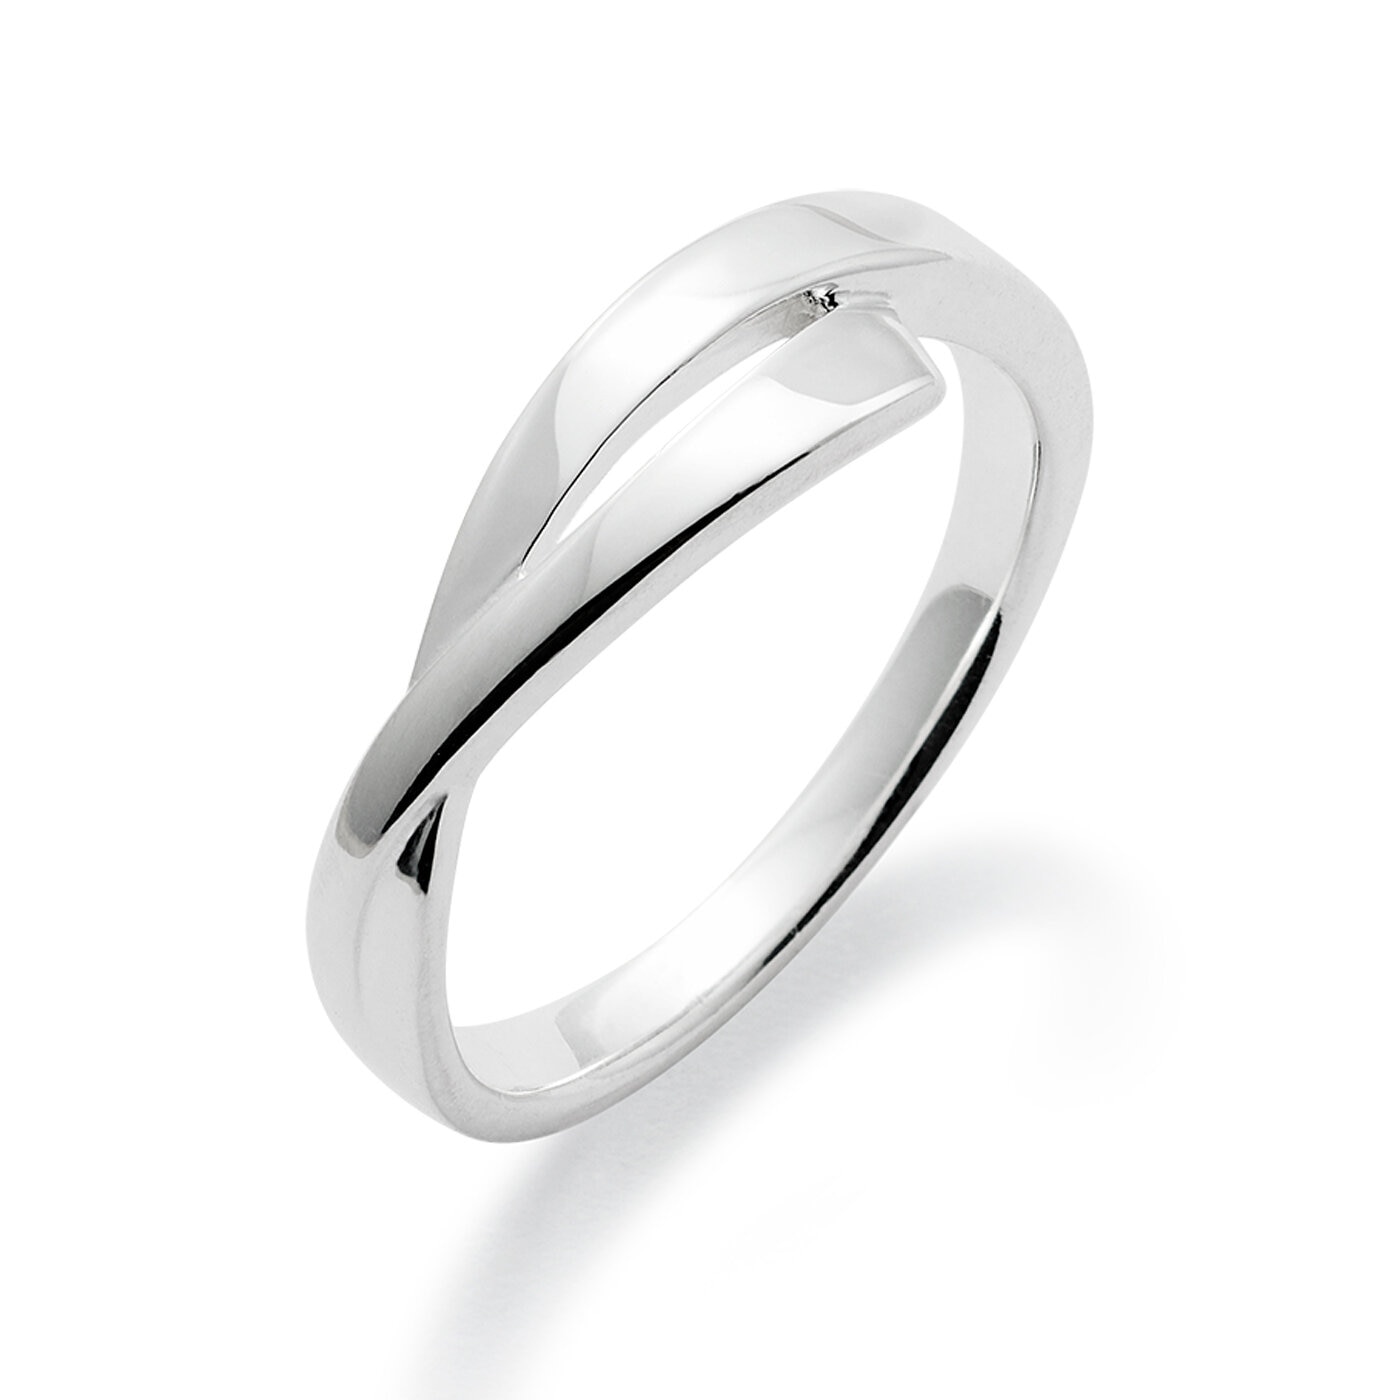 Simplicity ring            